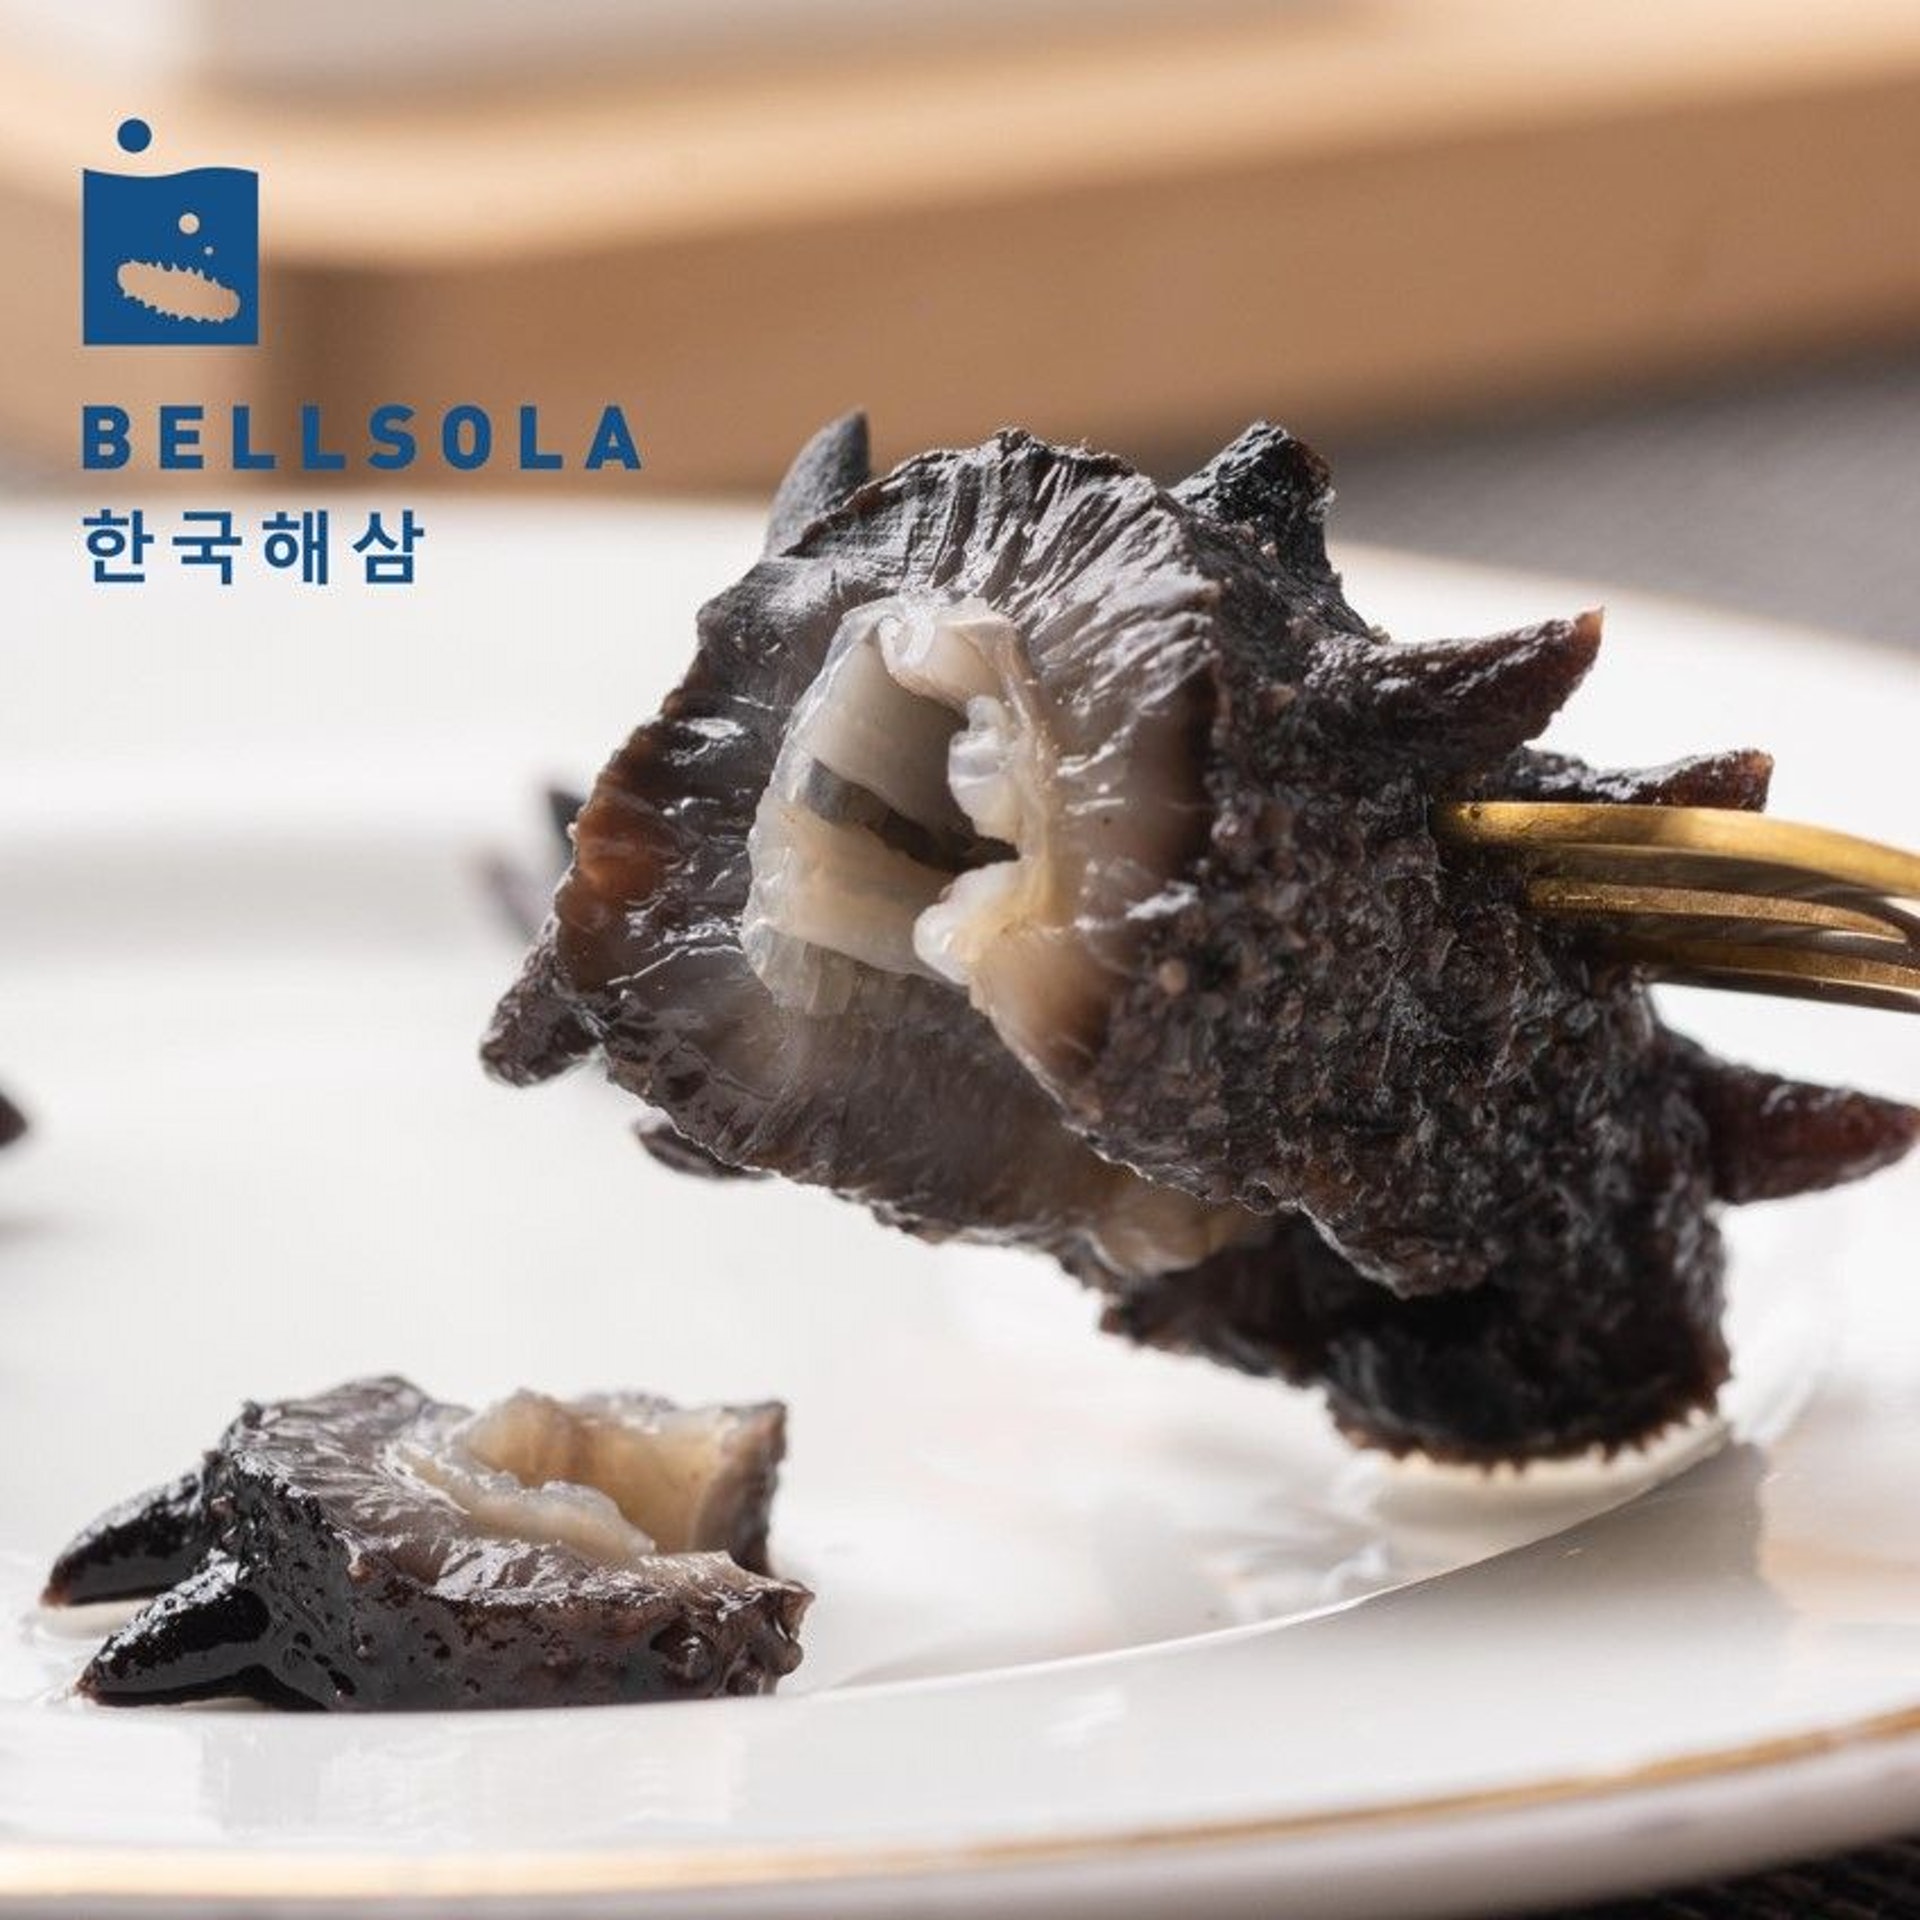 Bellsola出品的韓國即食野生遼參，屬正貨韓國優質遼參 (圖片: Bellsola)